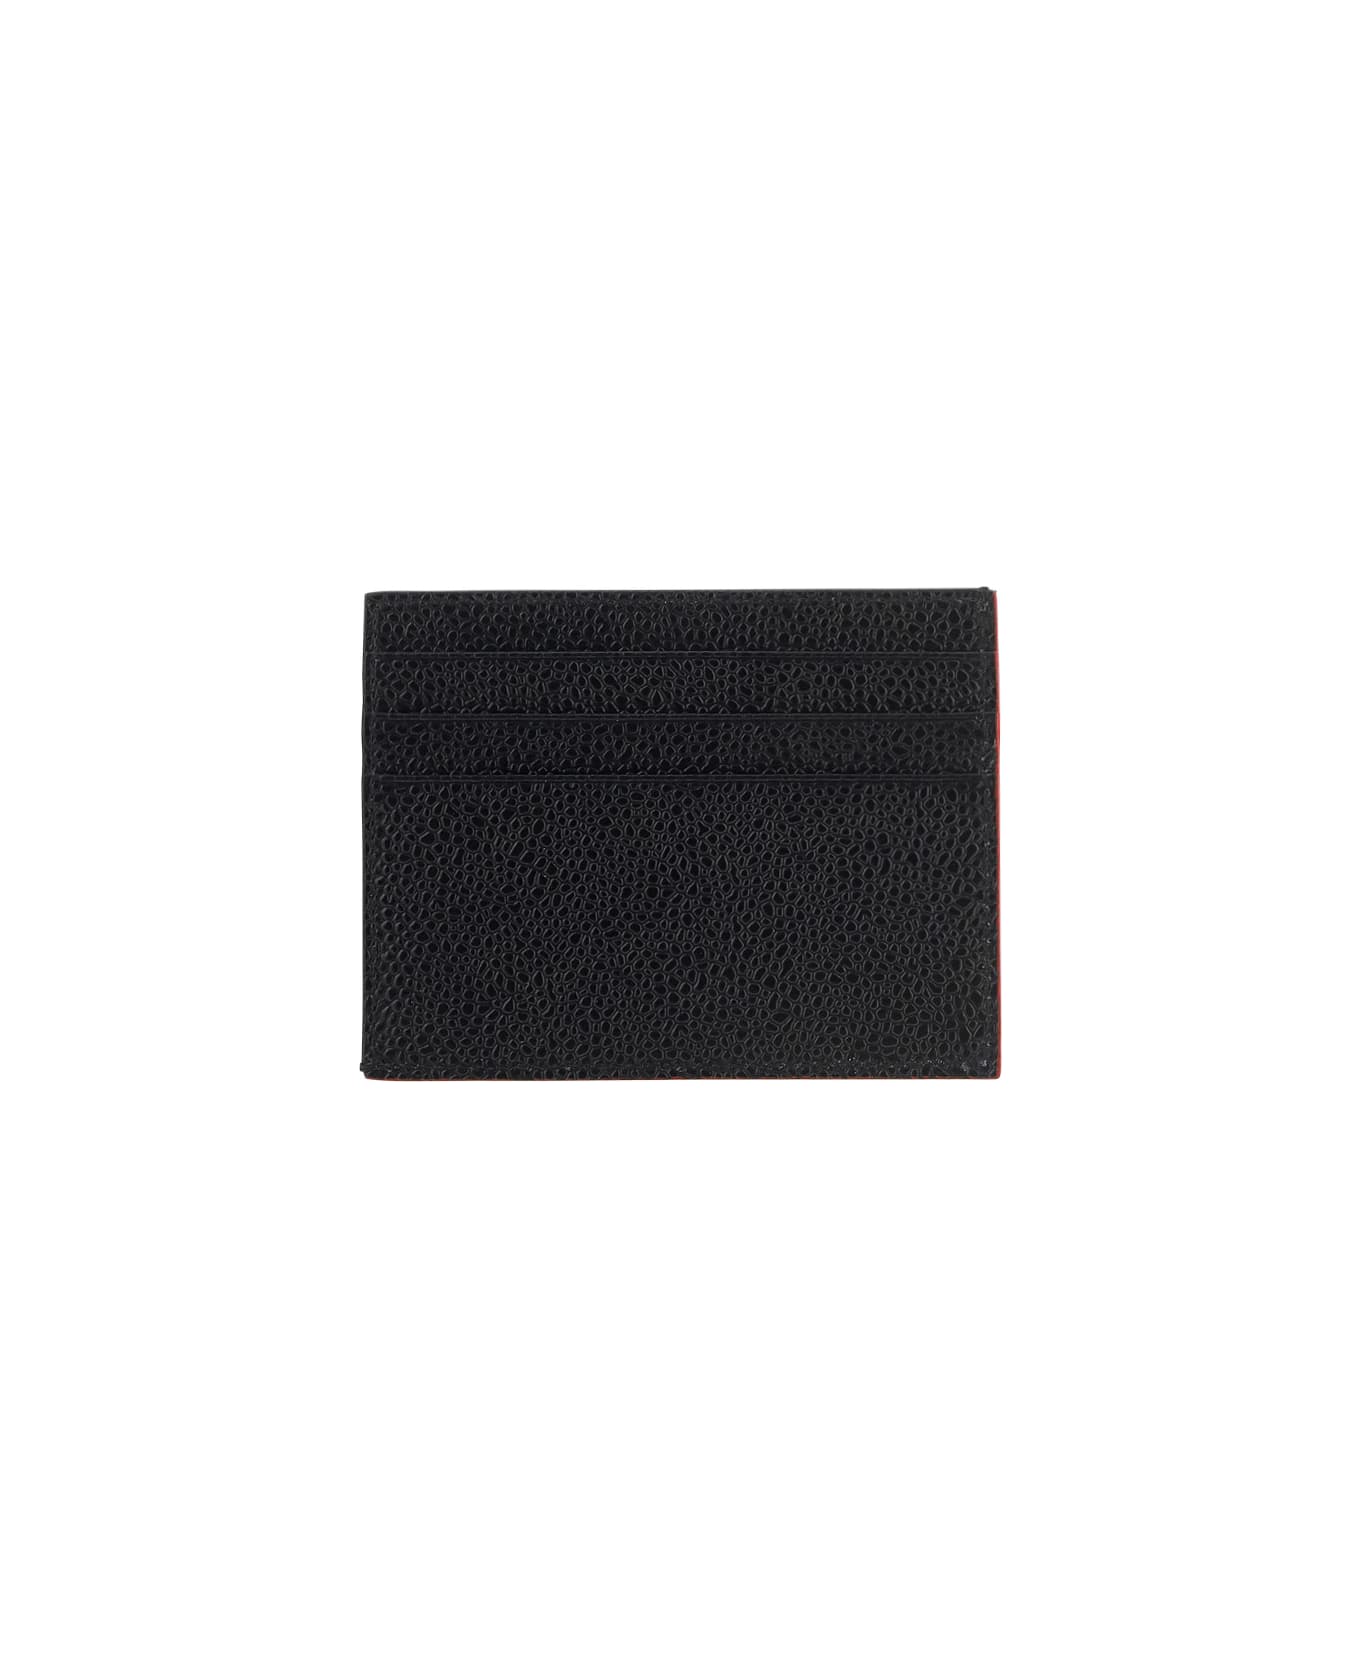 Thom Browne Card Holder - Black